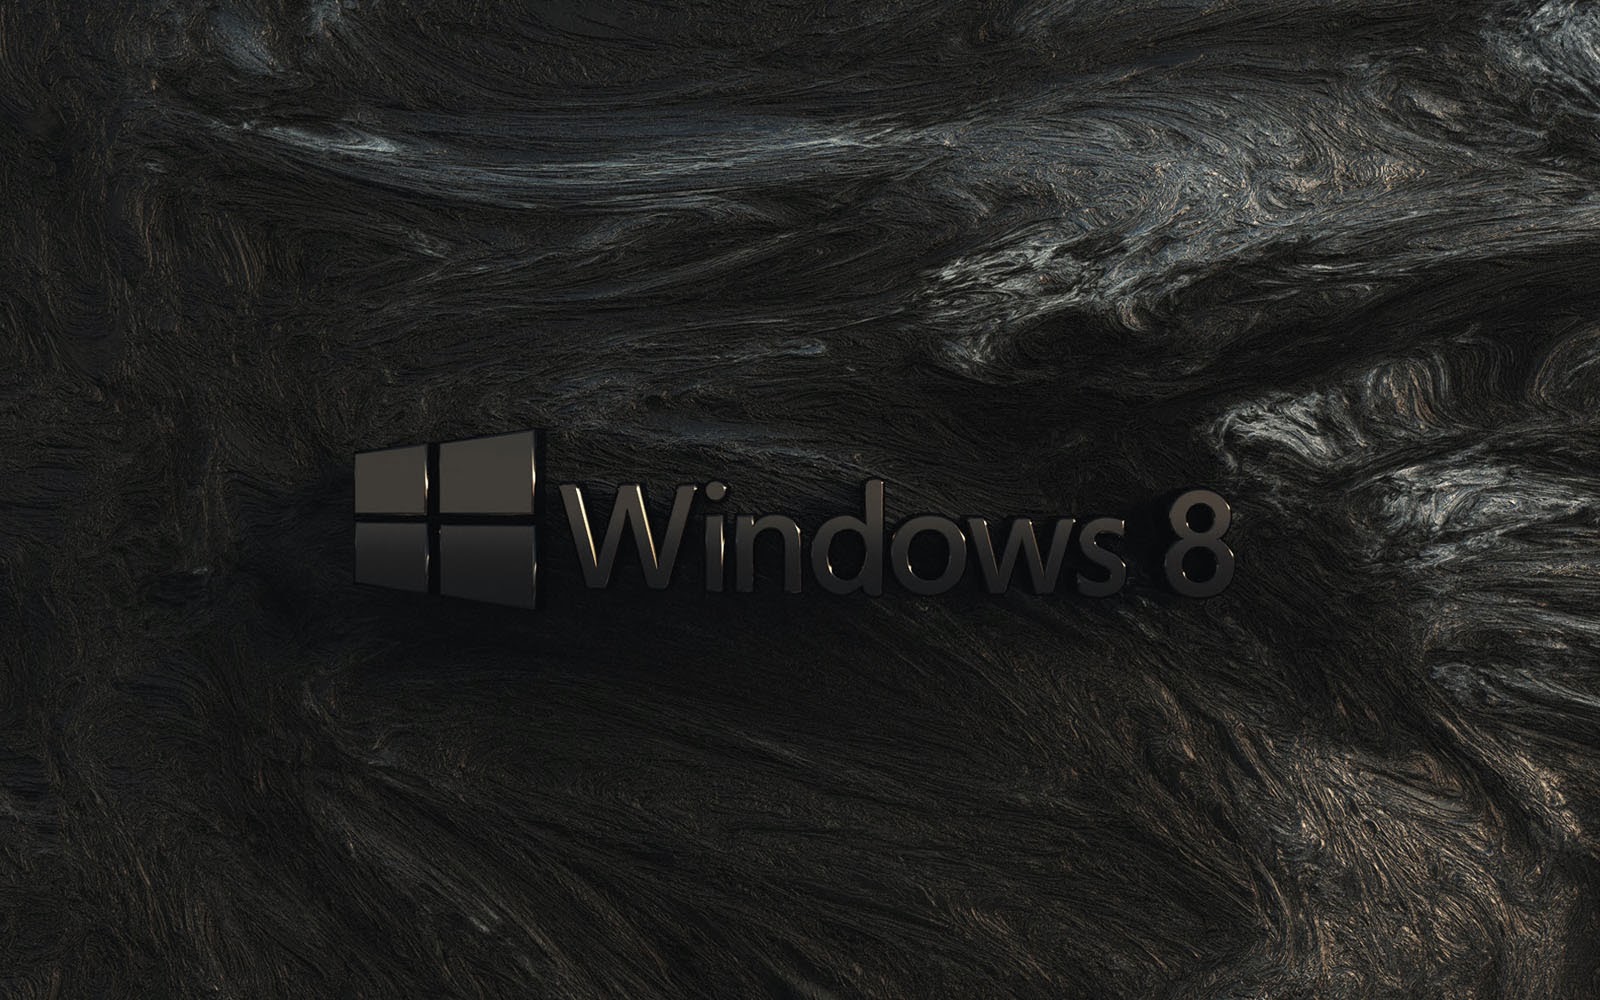  Black  Metal  Windows Logo Wallpapers  Top Wallpaper  Desktop